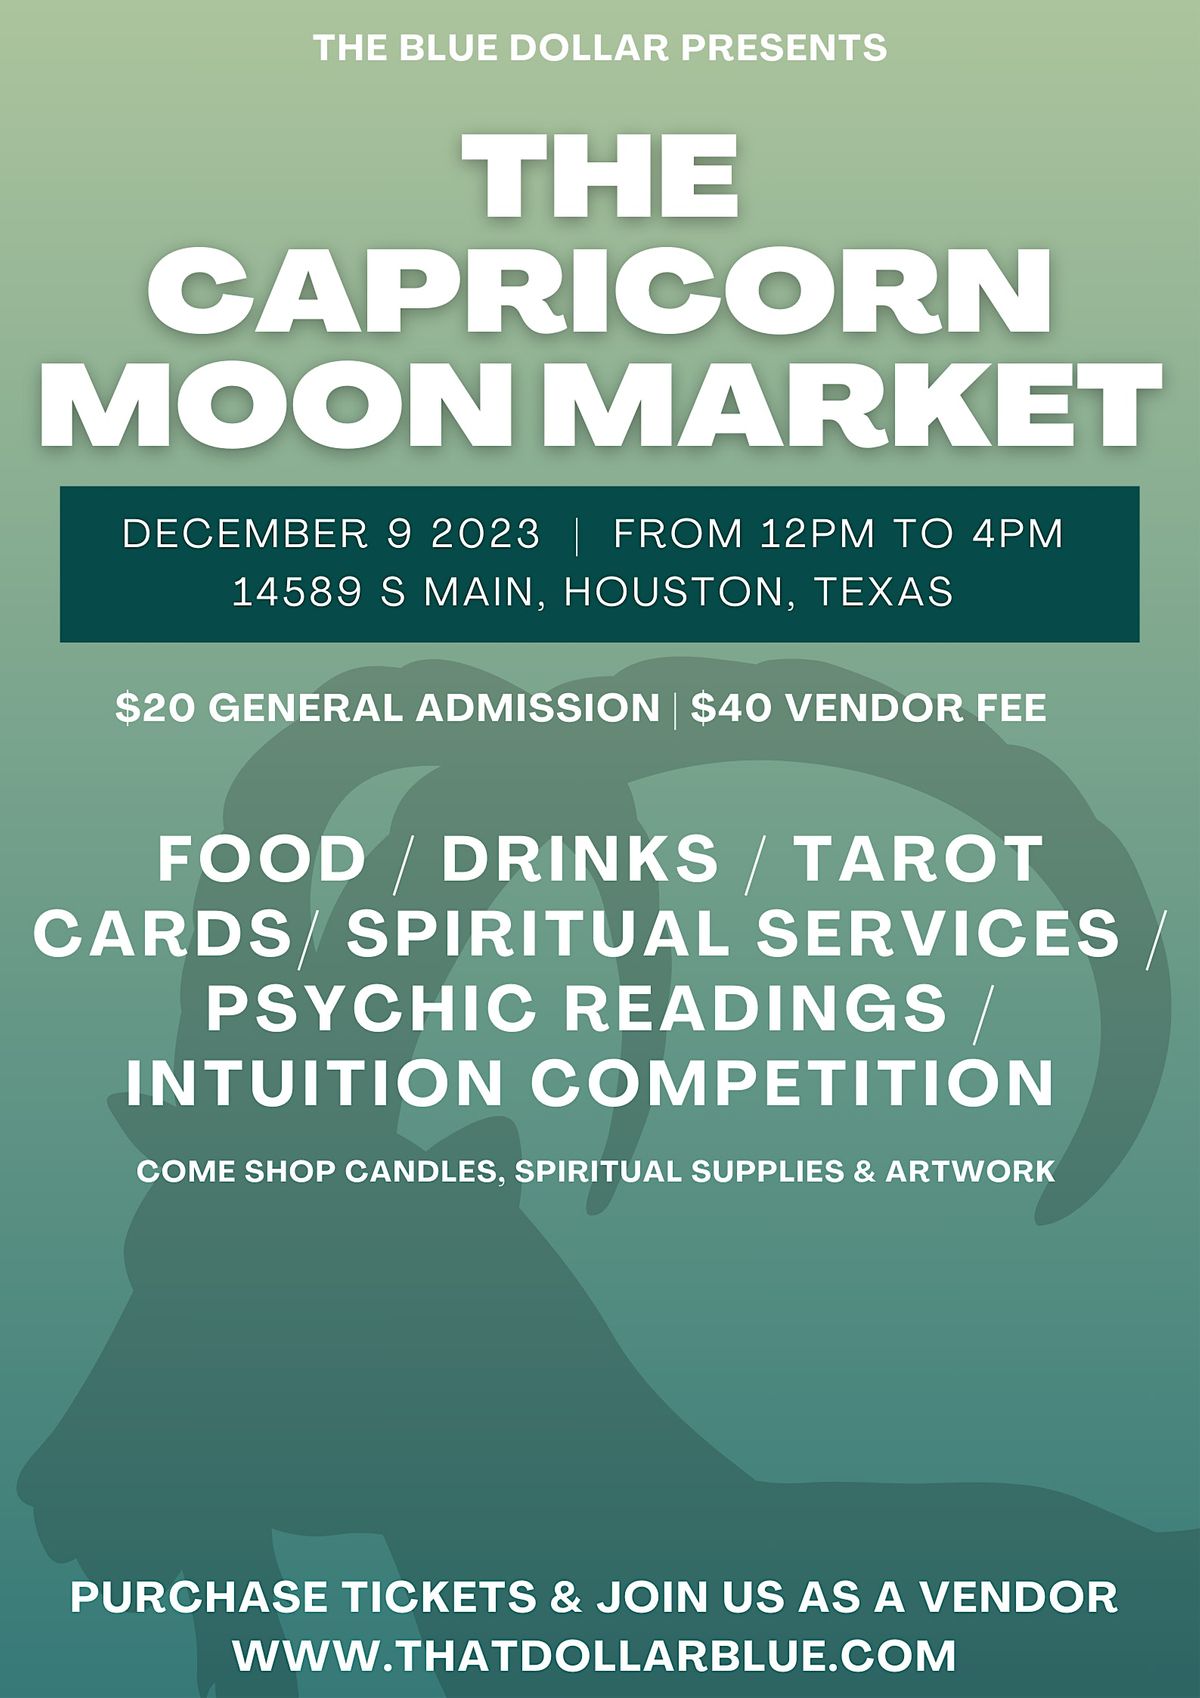 The Capricorn Moon Market